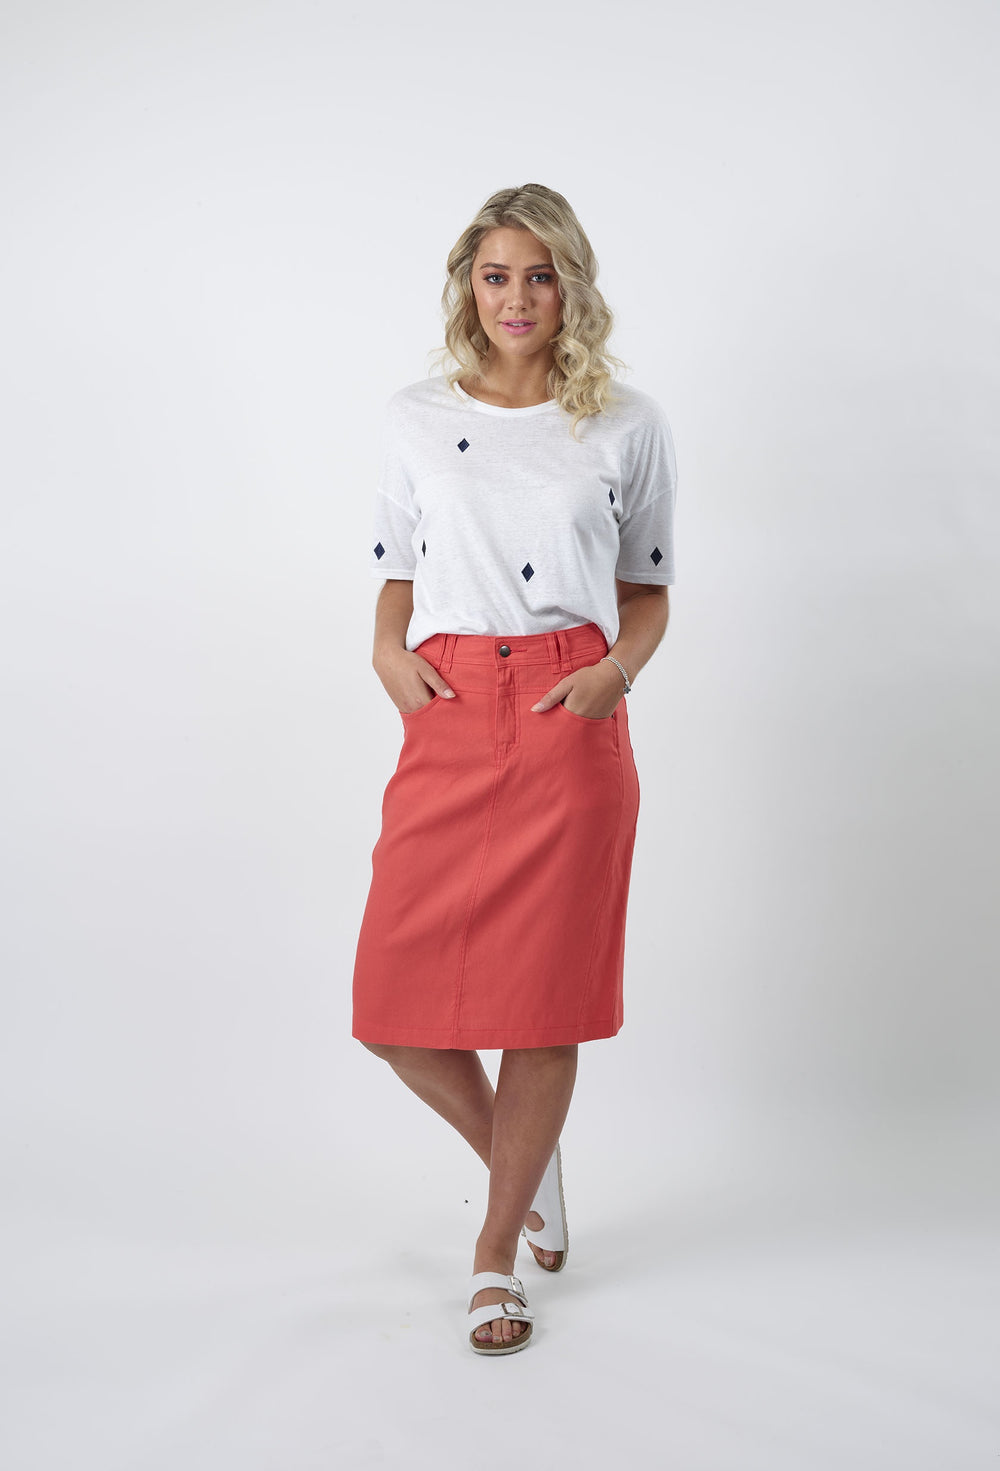 Knewe Bermuda Skirt - K4003